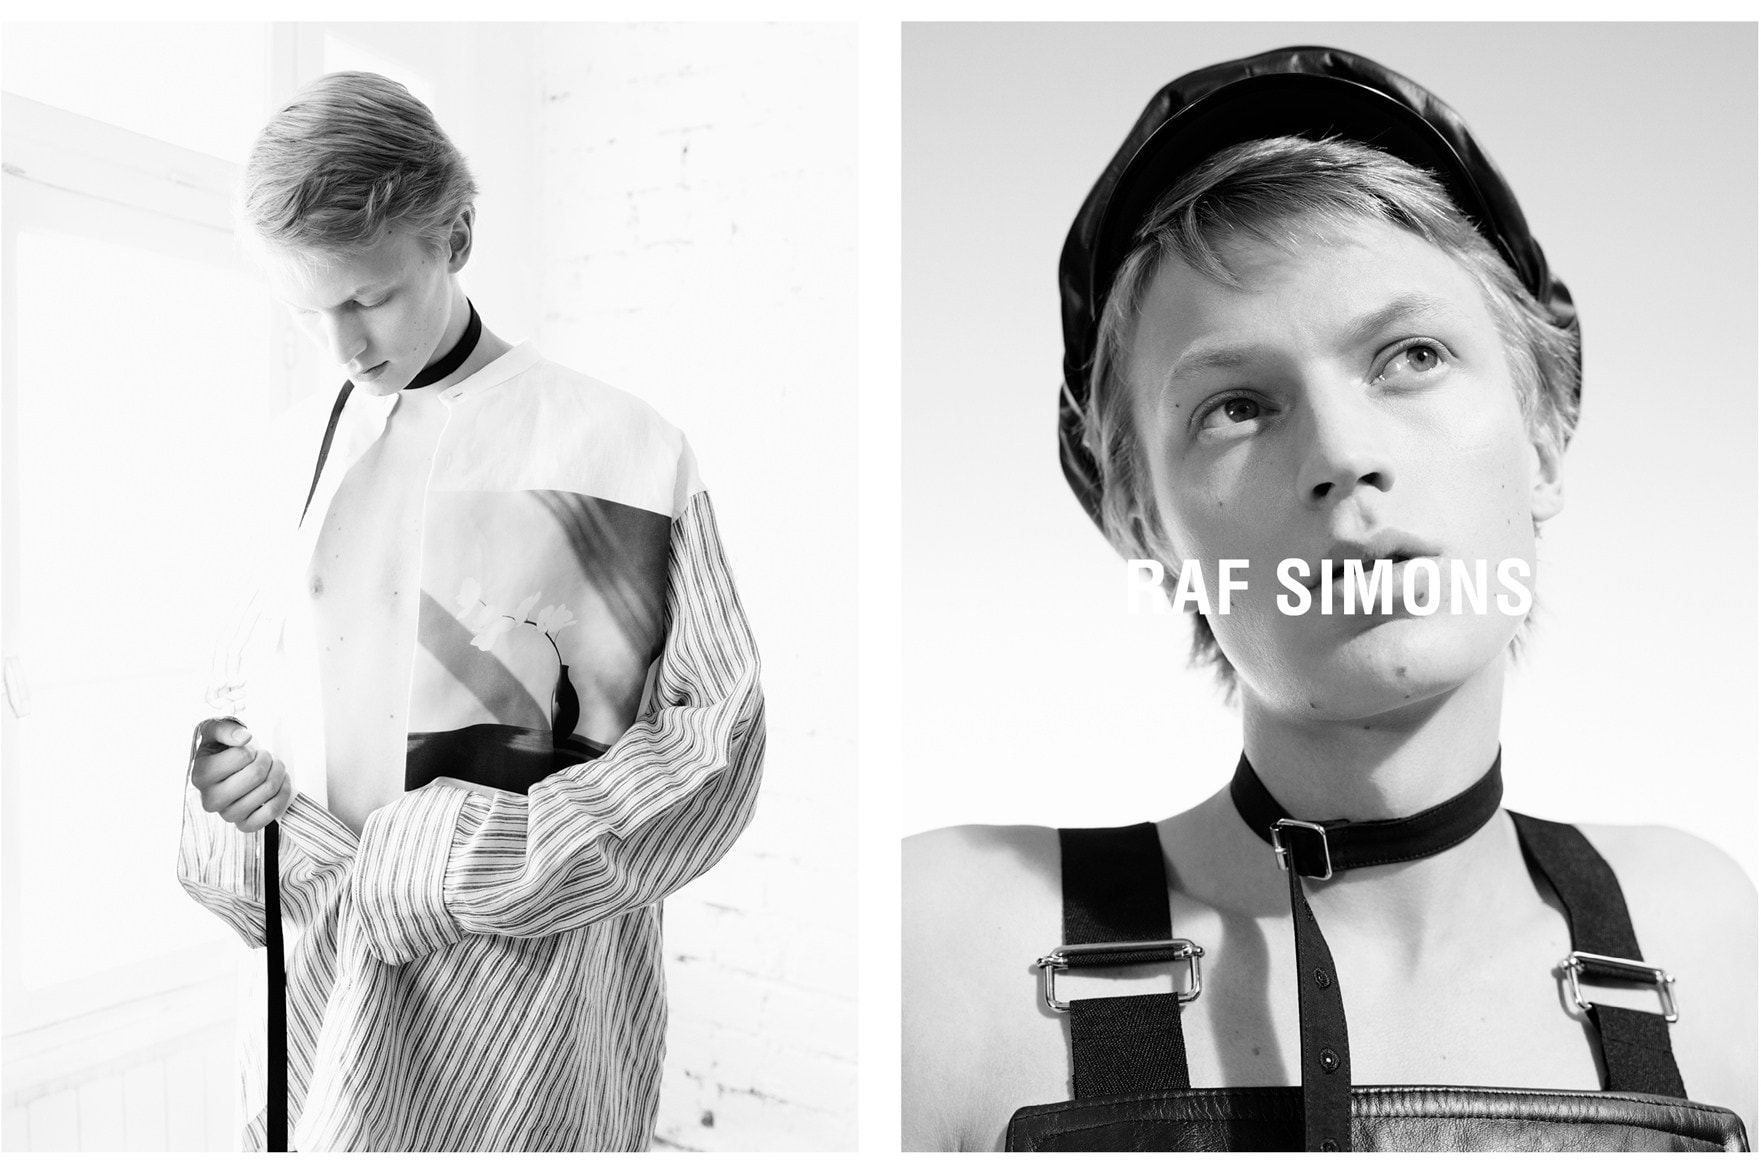 Raf Simons 2017 Spring/Summer Campaign